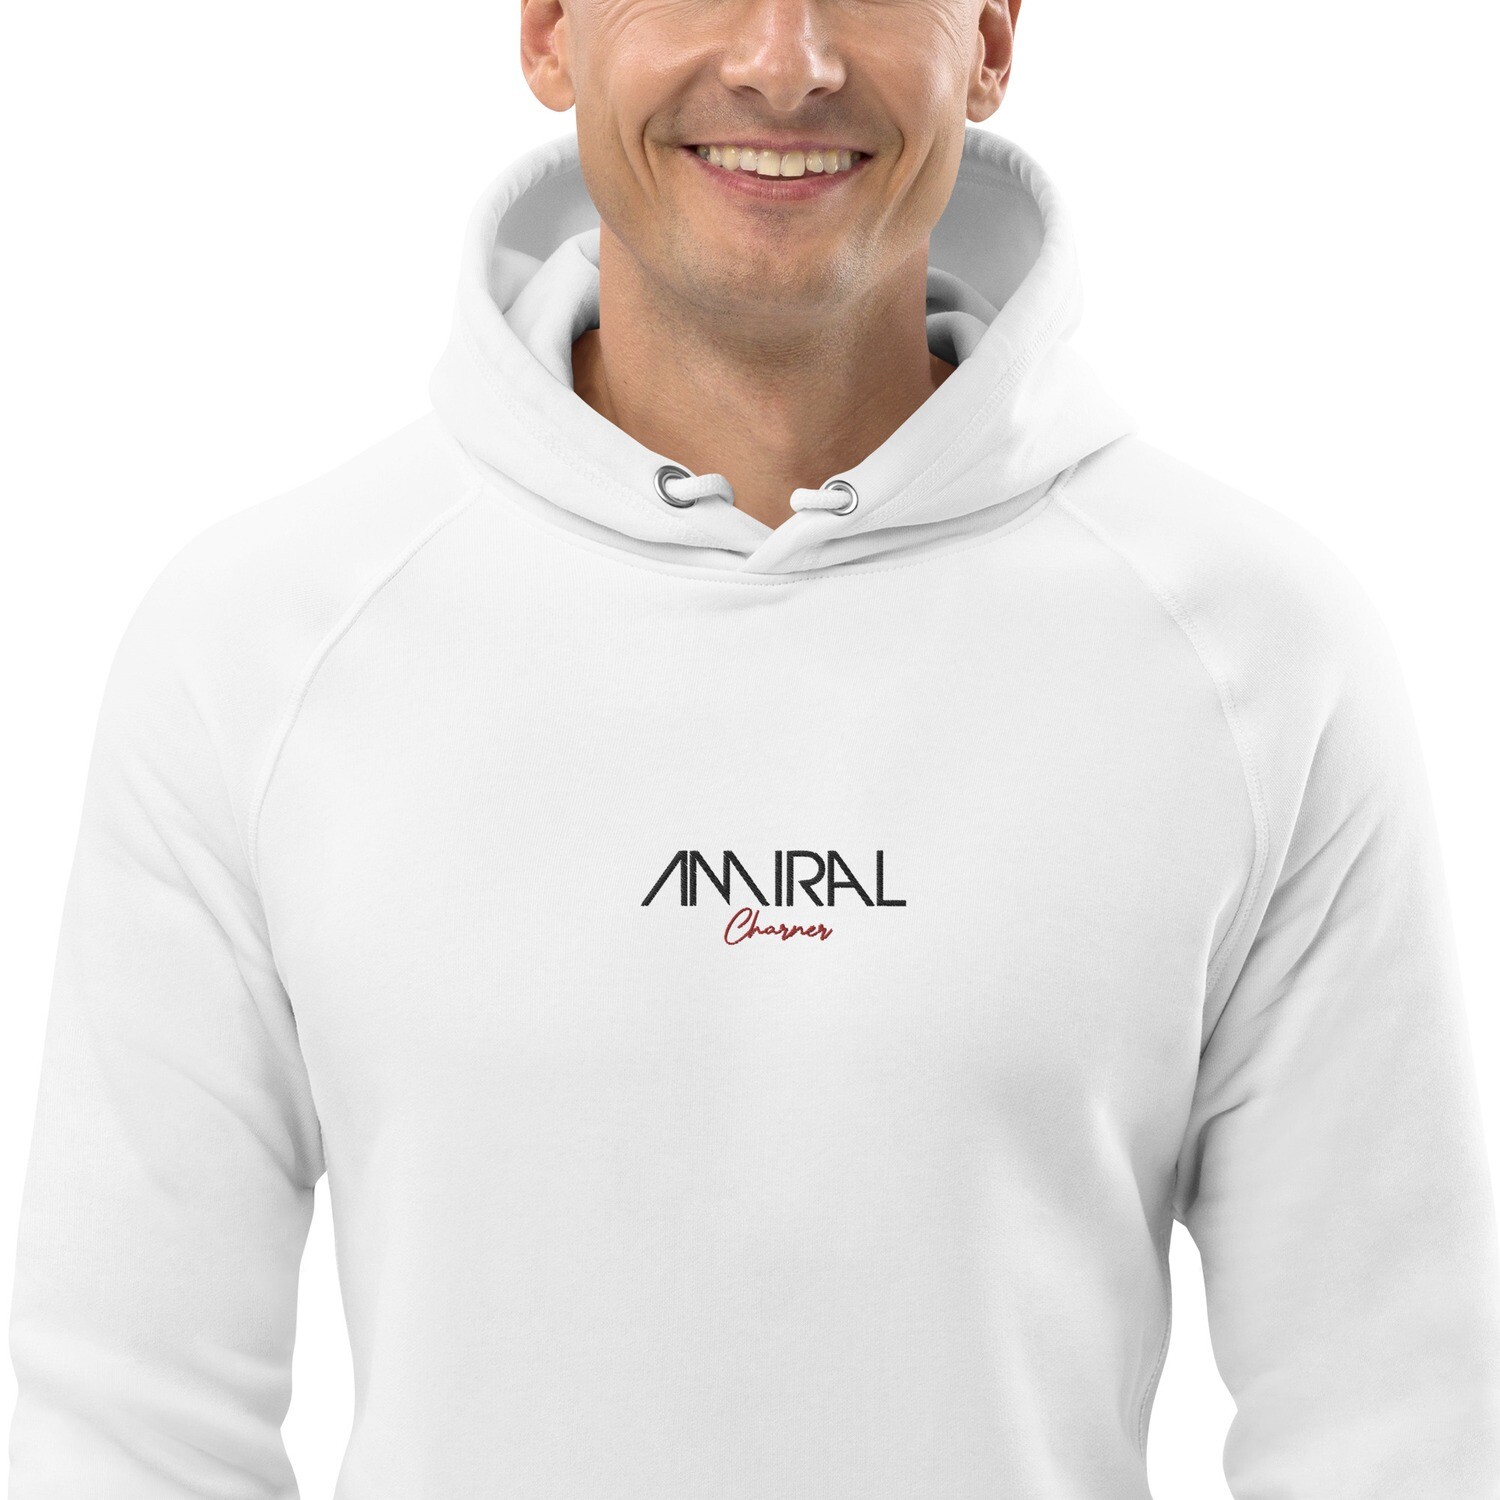 Unisex pullover hoodie Amiral Charner